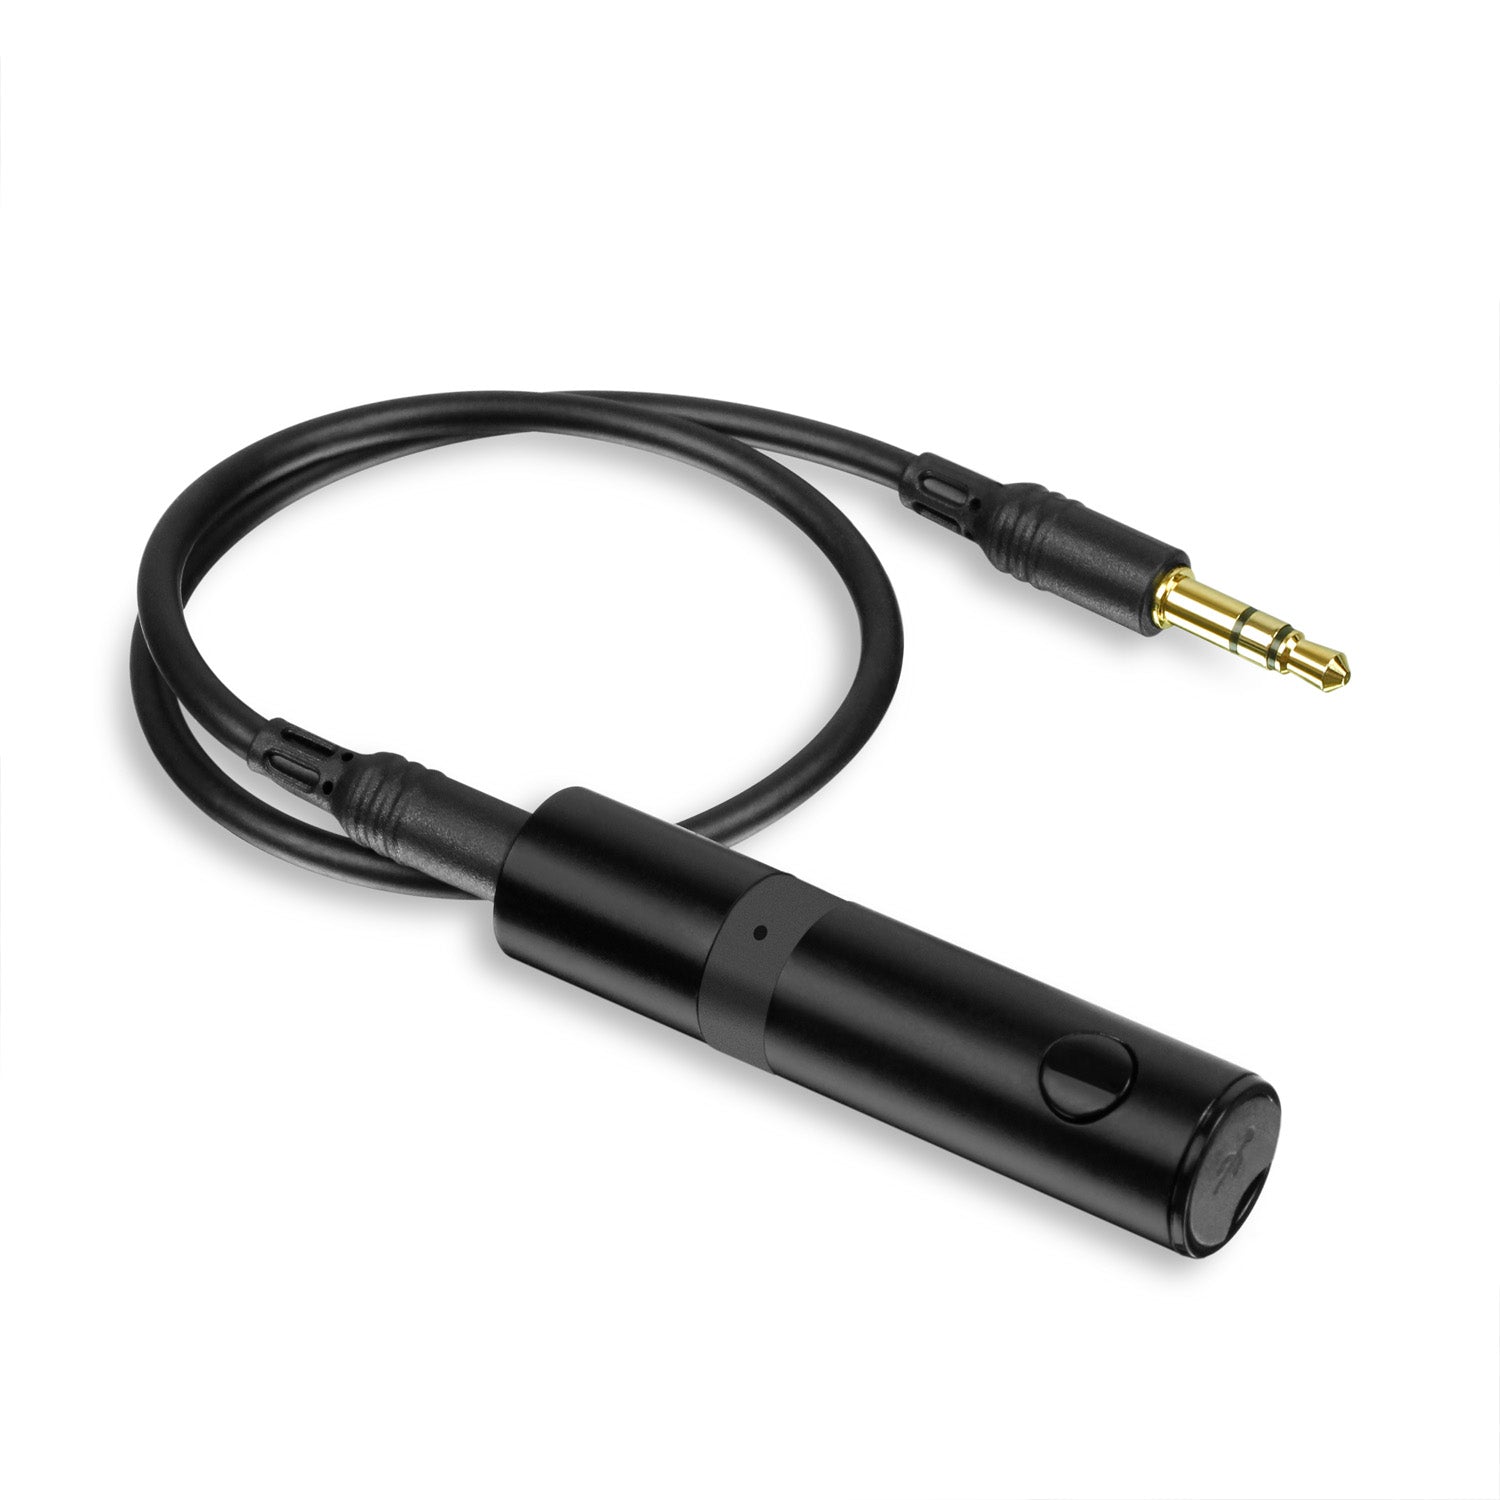 Bluetooth Audio Receiver - 3.5 mm